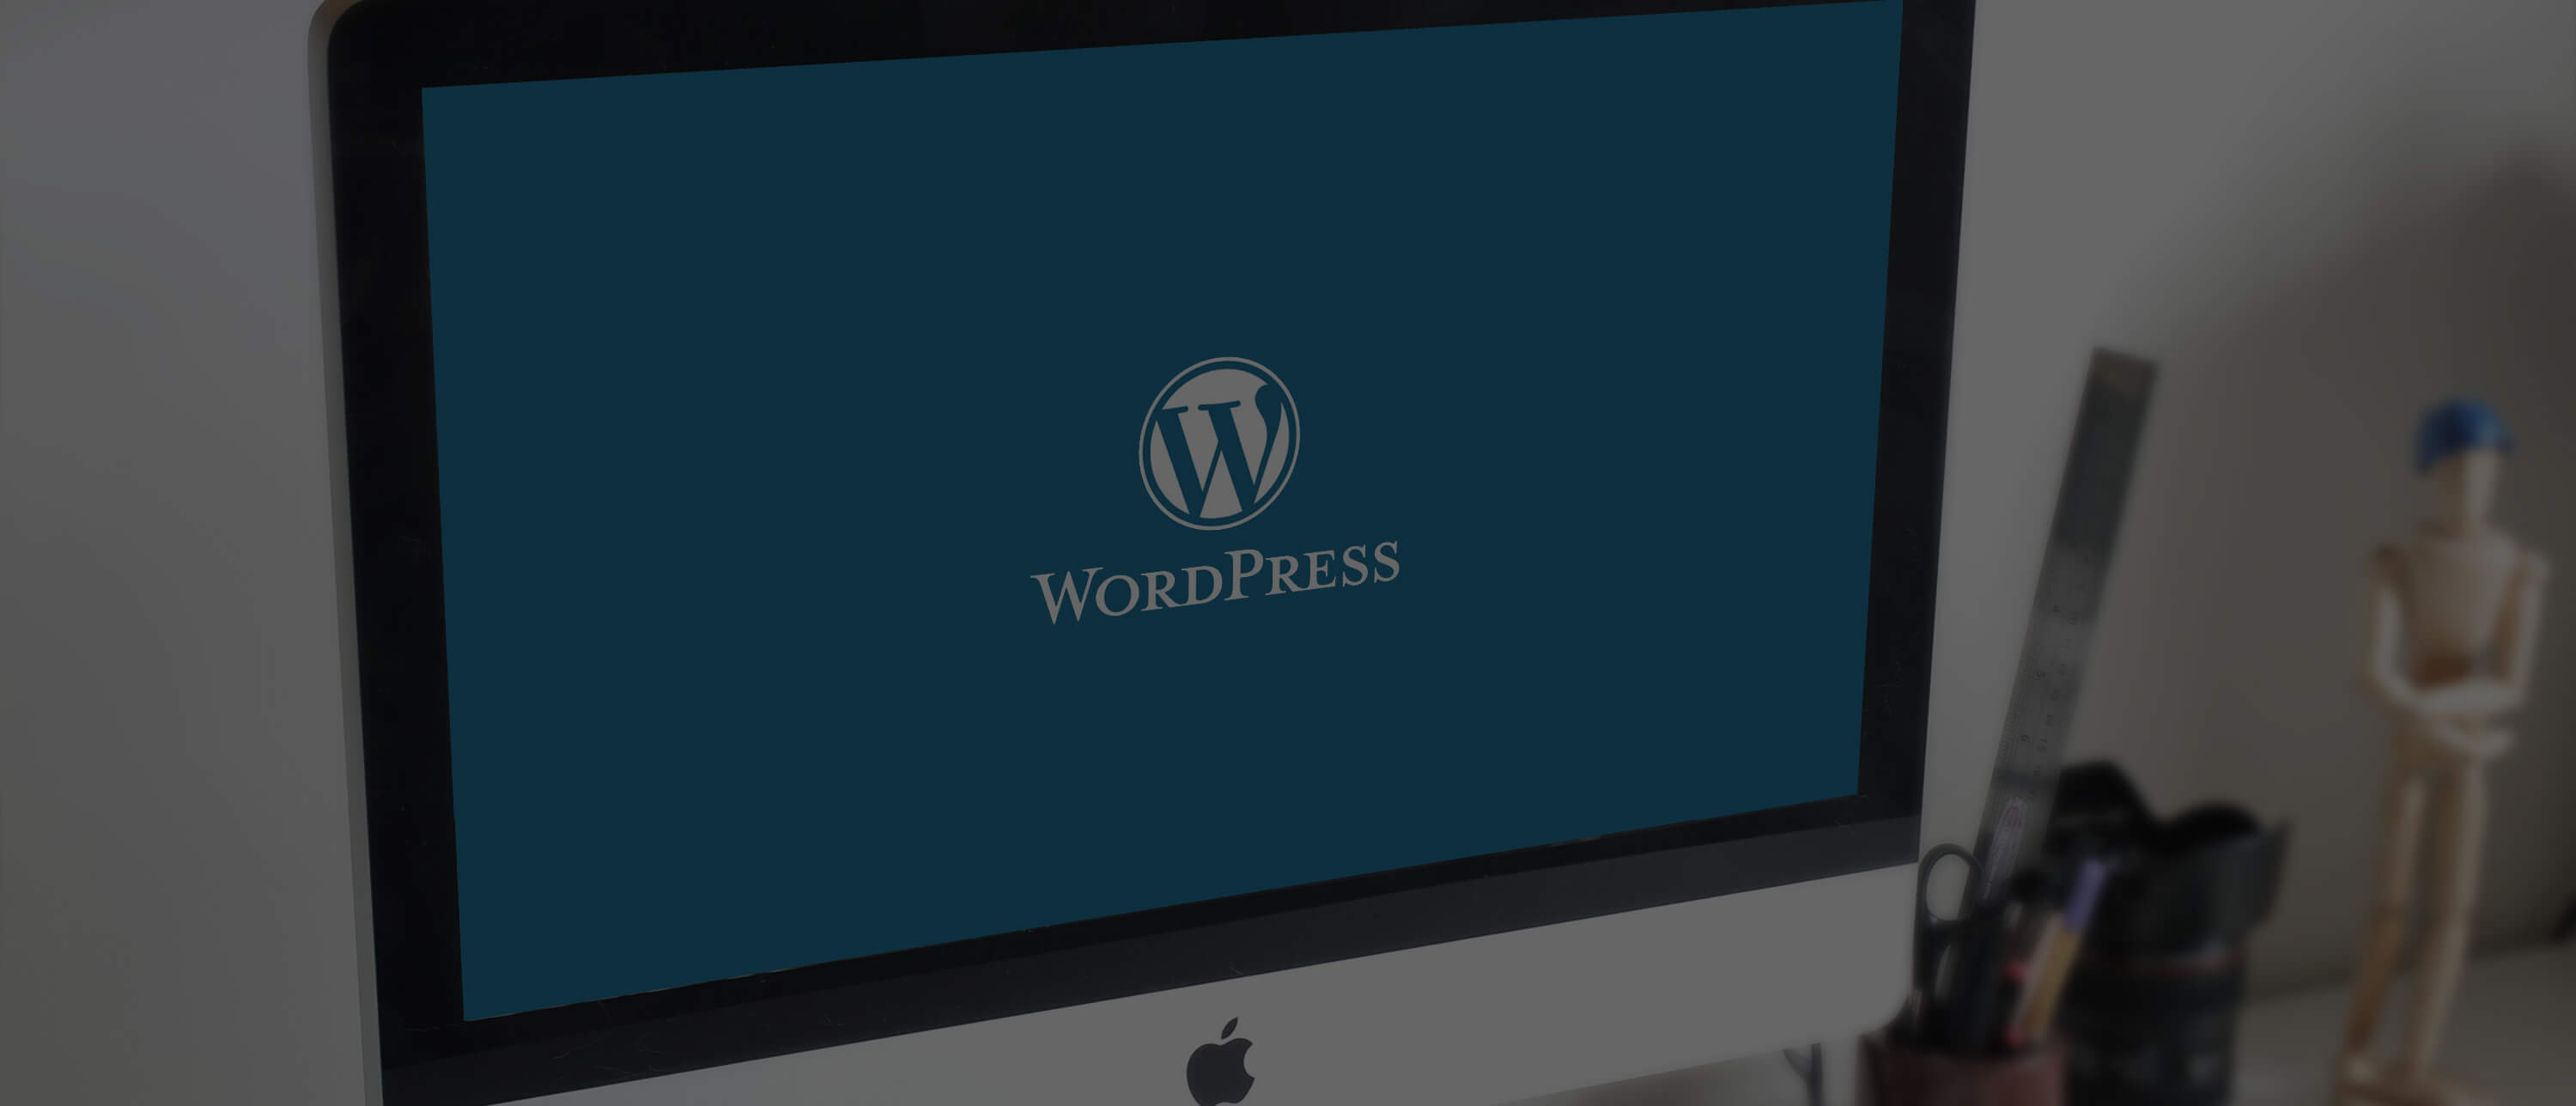 Página web WordPress